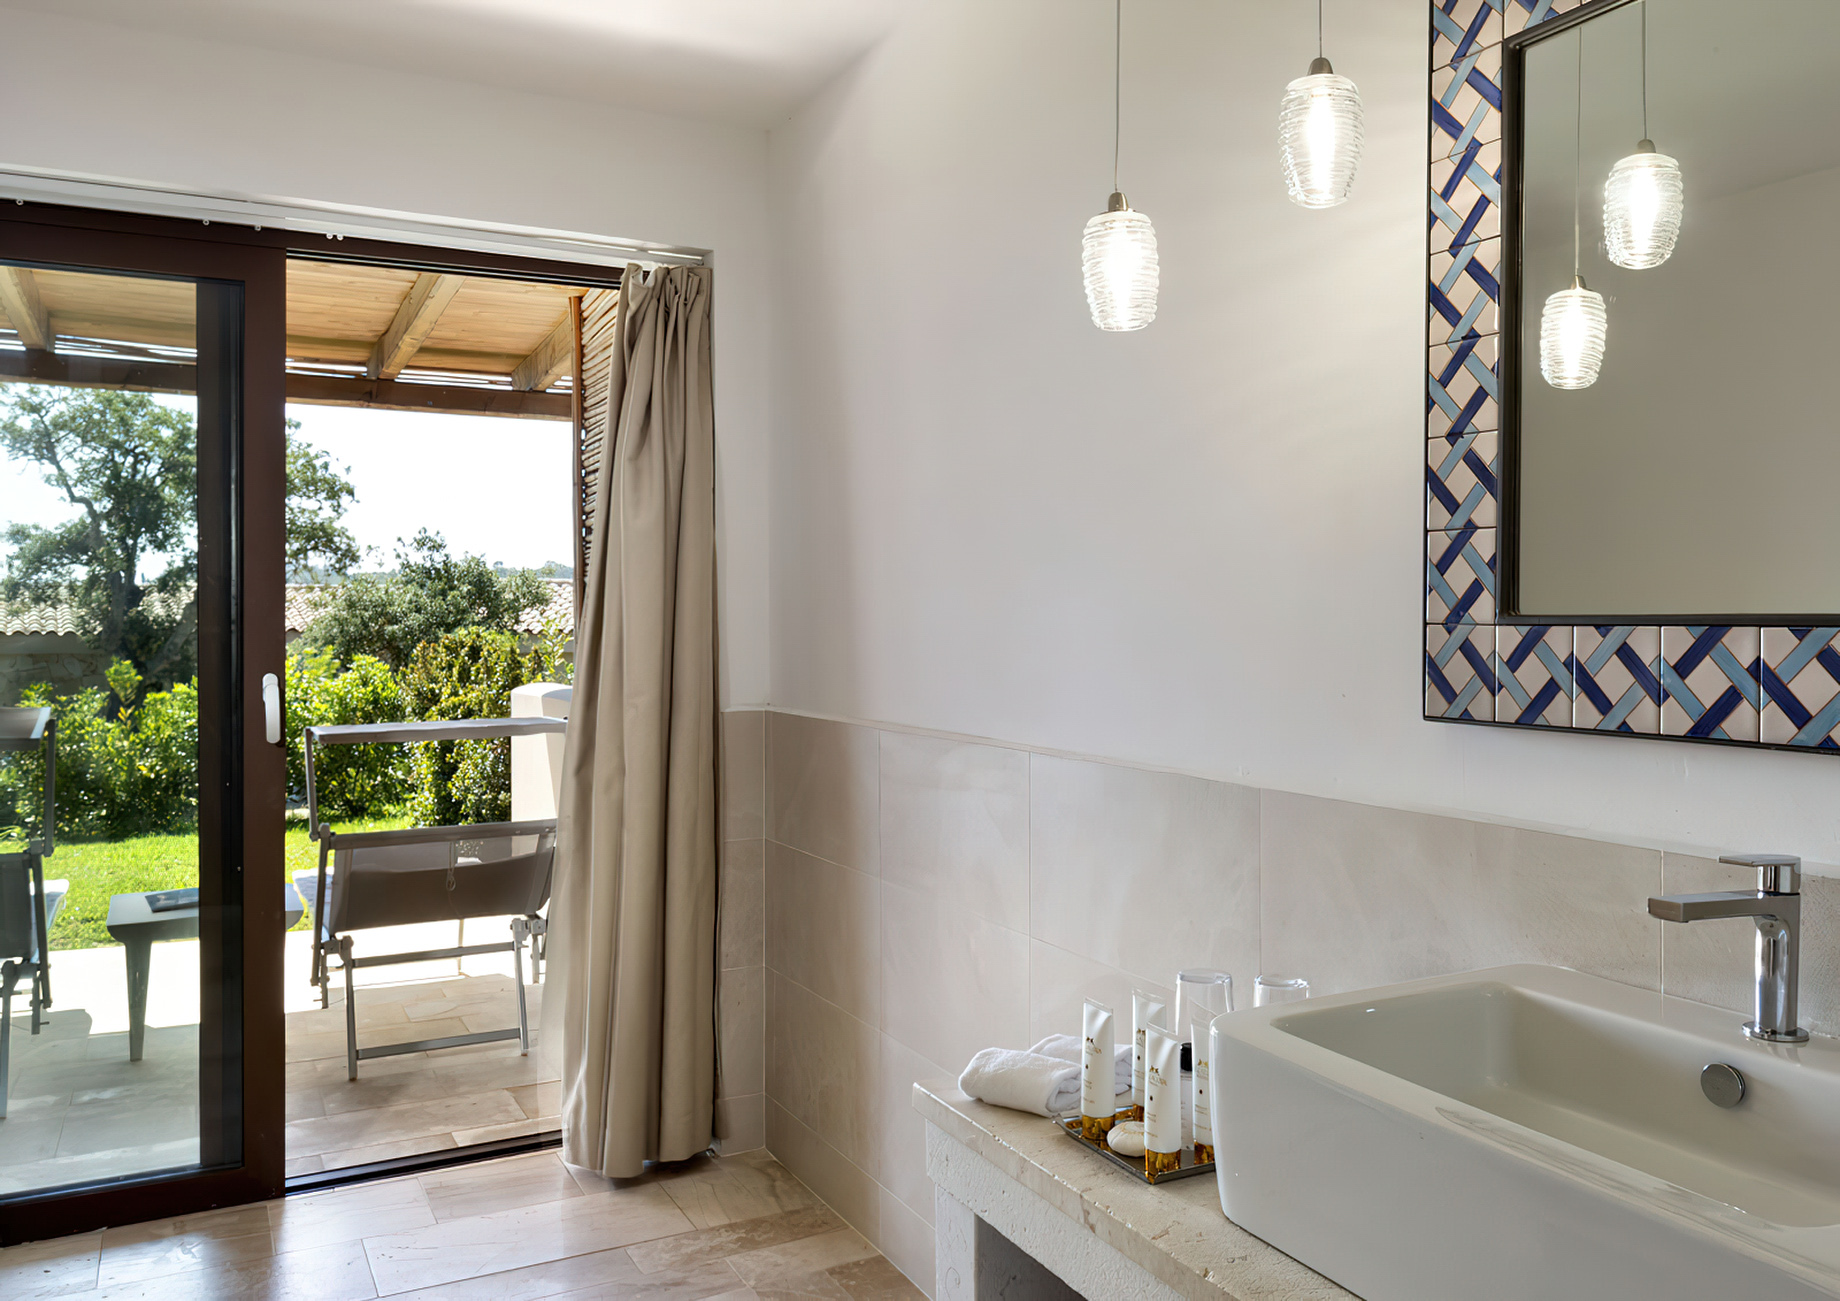 Baglioni Resort Sardinia – San Teodoro, Sardegna, Italy – Grand Deluxe Room Bathroom